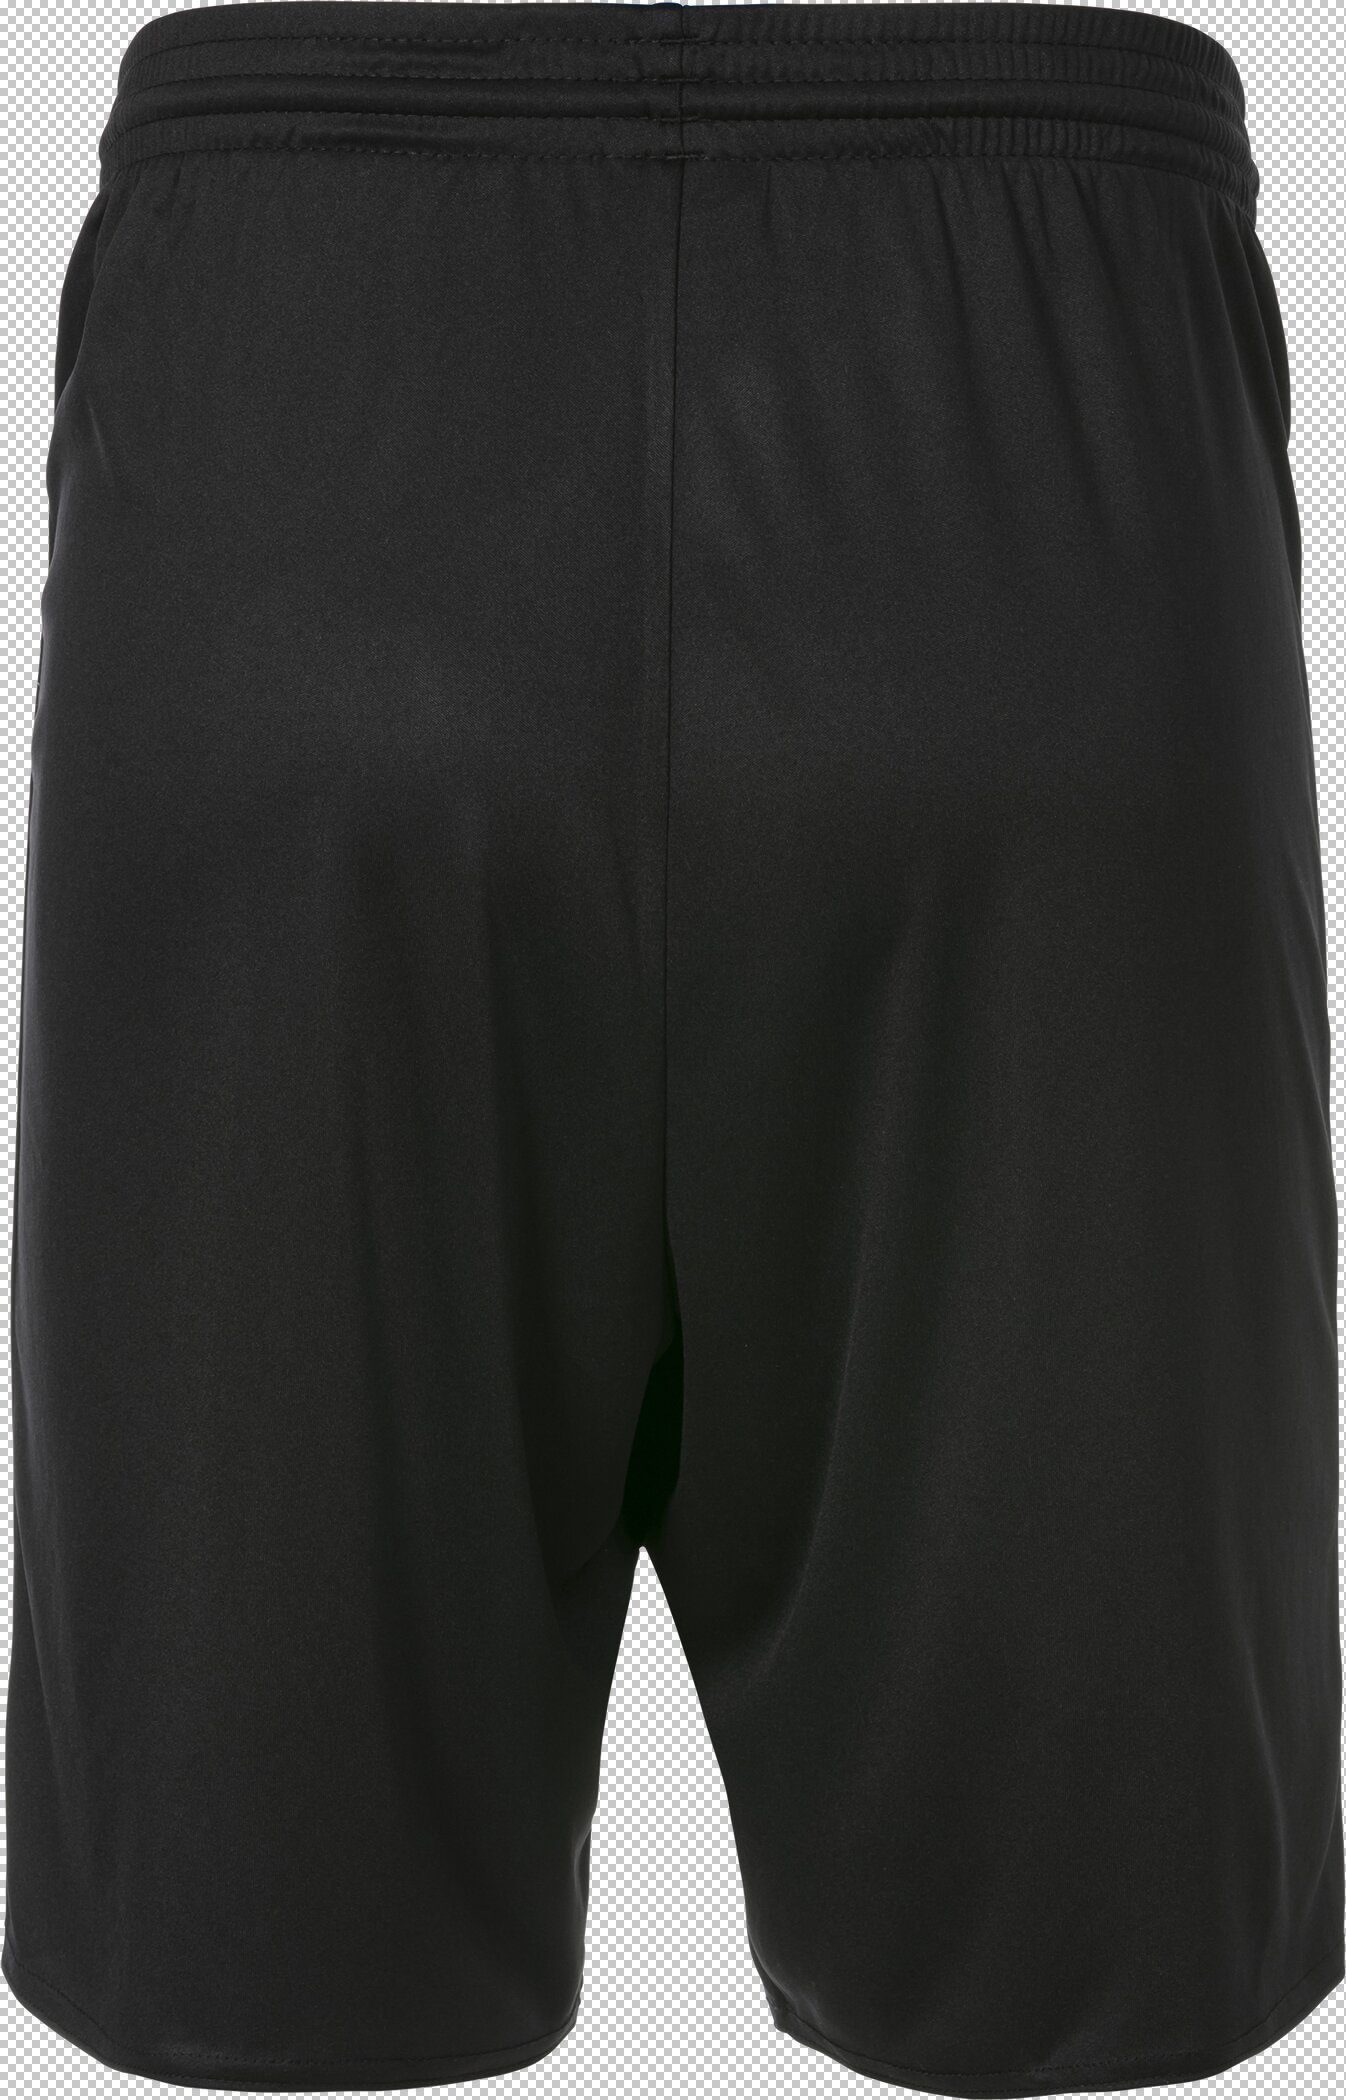 Shorts Jako Sporthose 2.0 Manchester schwarz/weiý